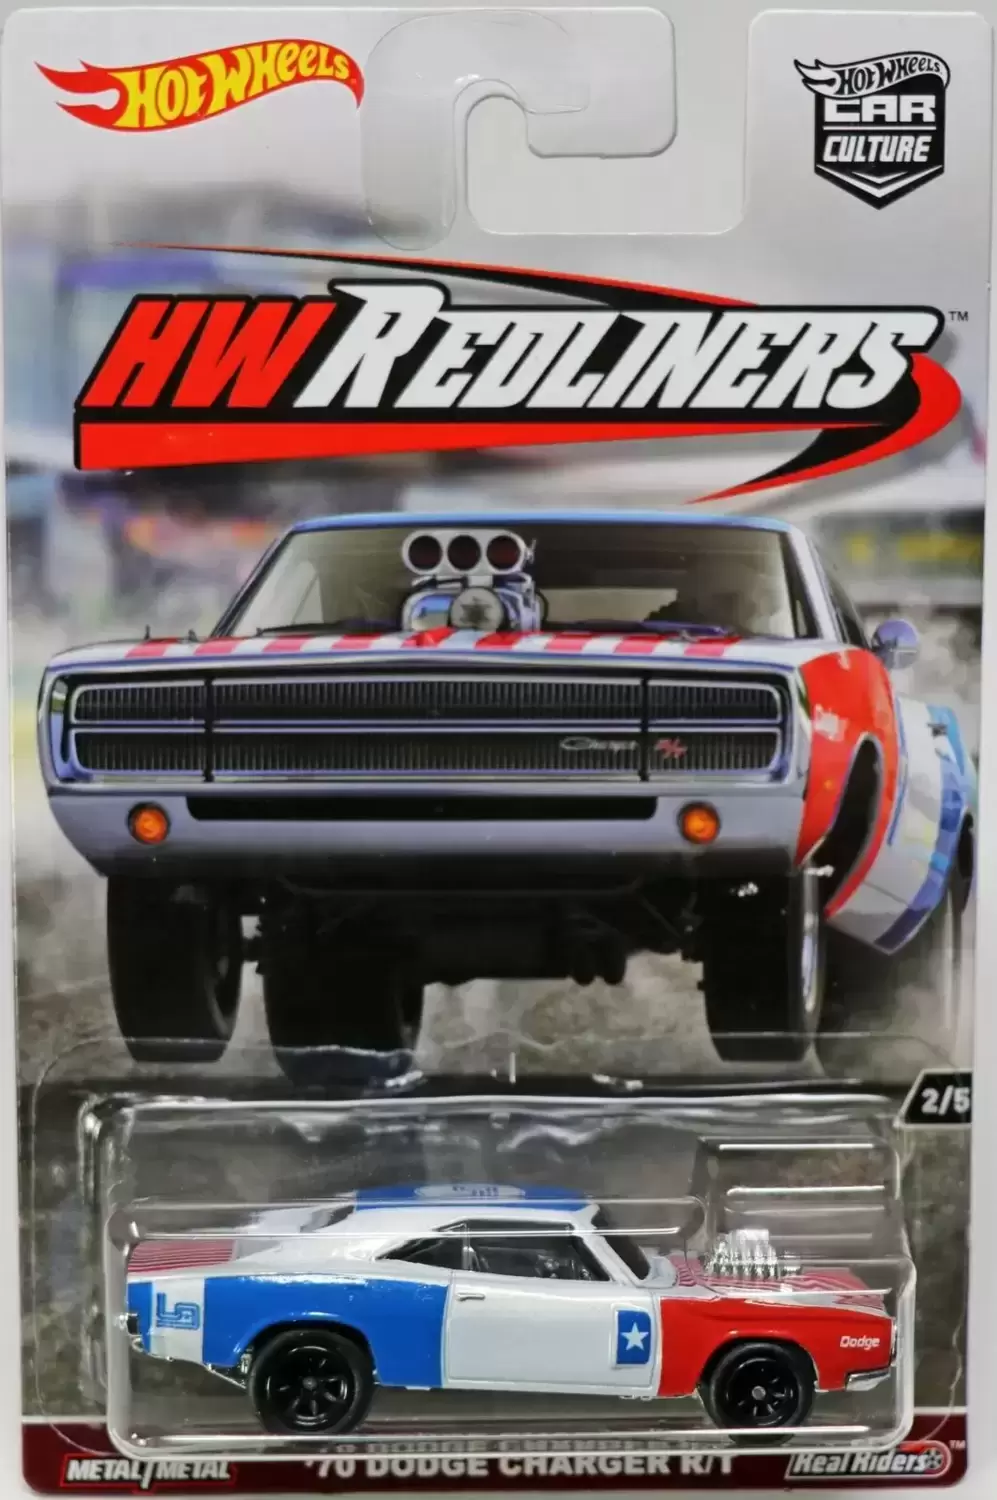 Hot Wheels - Car Culture - HW Redliners - 70 Dodge Charger R/T